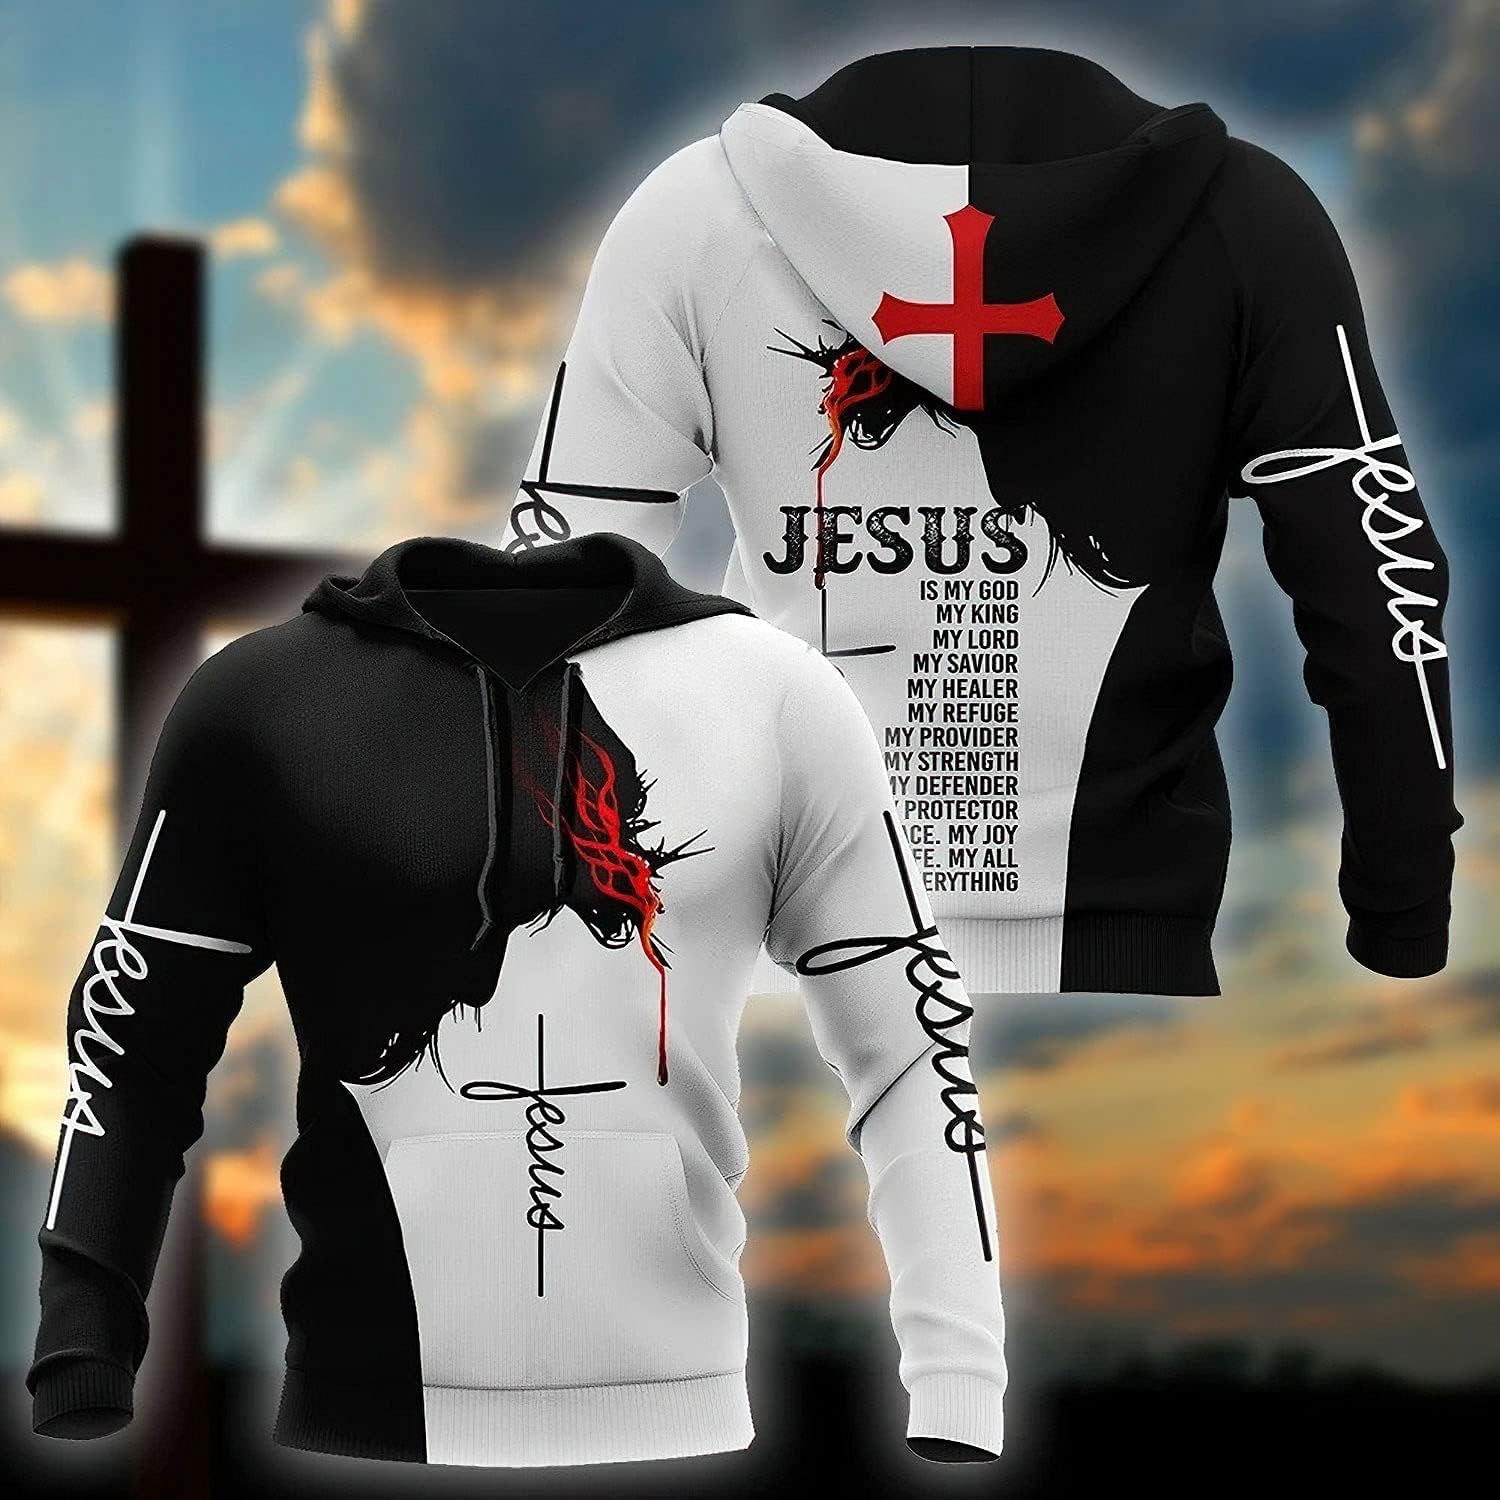 "Divine 3D Jesus Hoodies: Unisex Praying Hands Sweatshirt with King Print - Spread the Good Word in Style!"